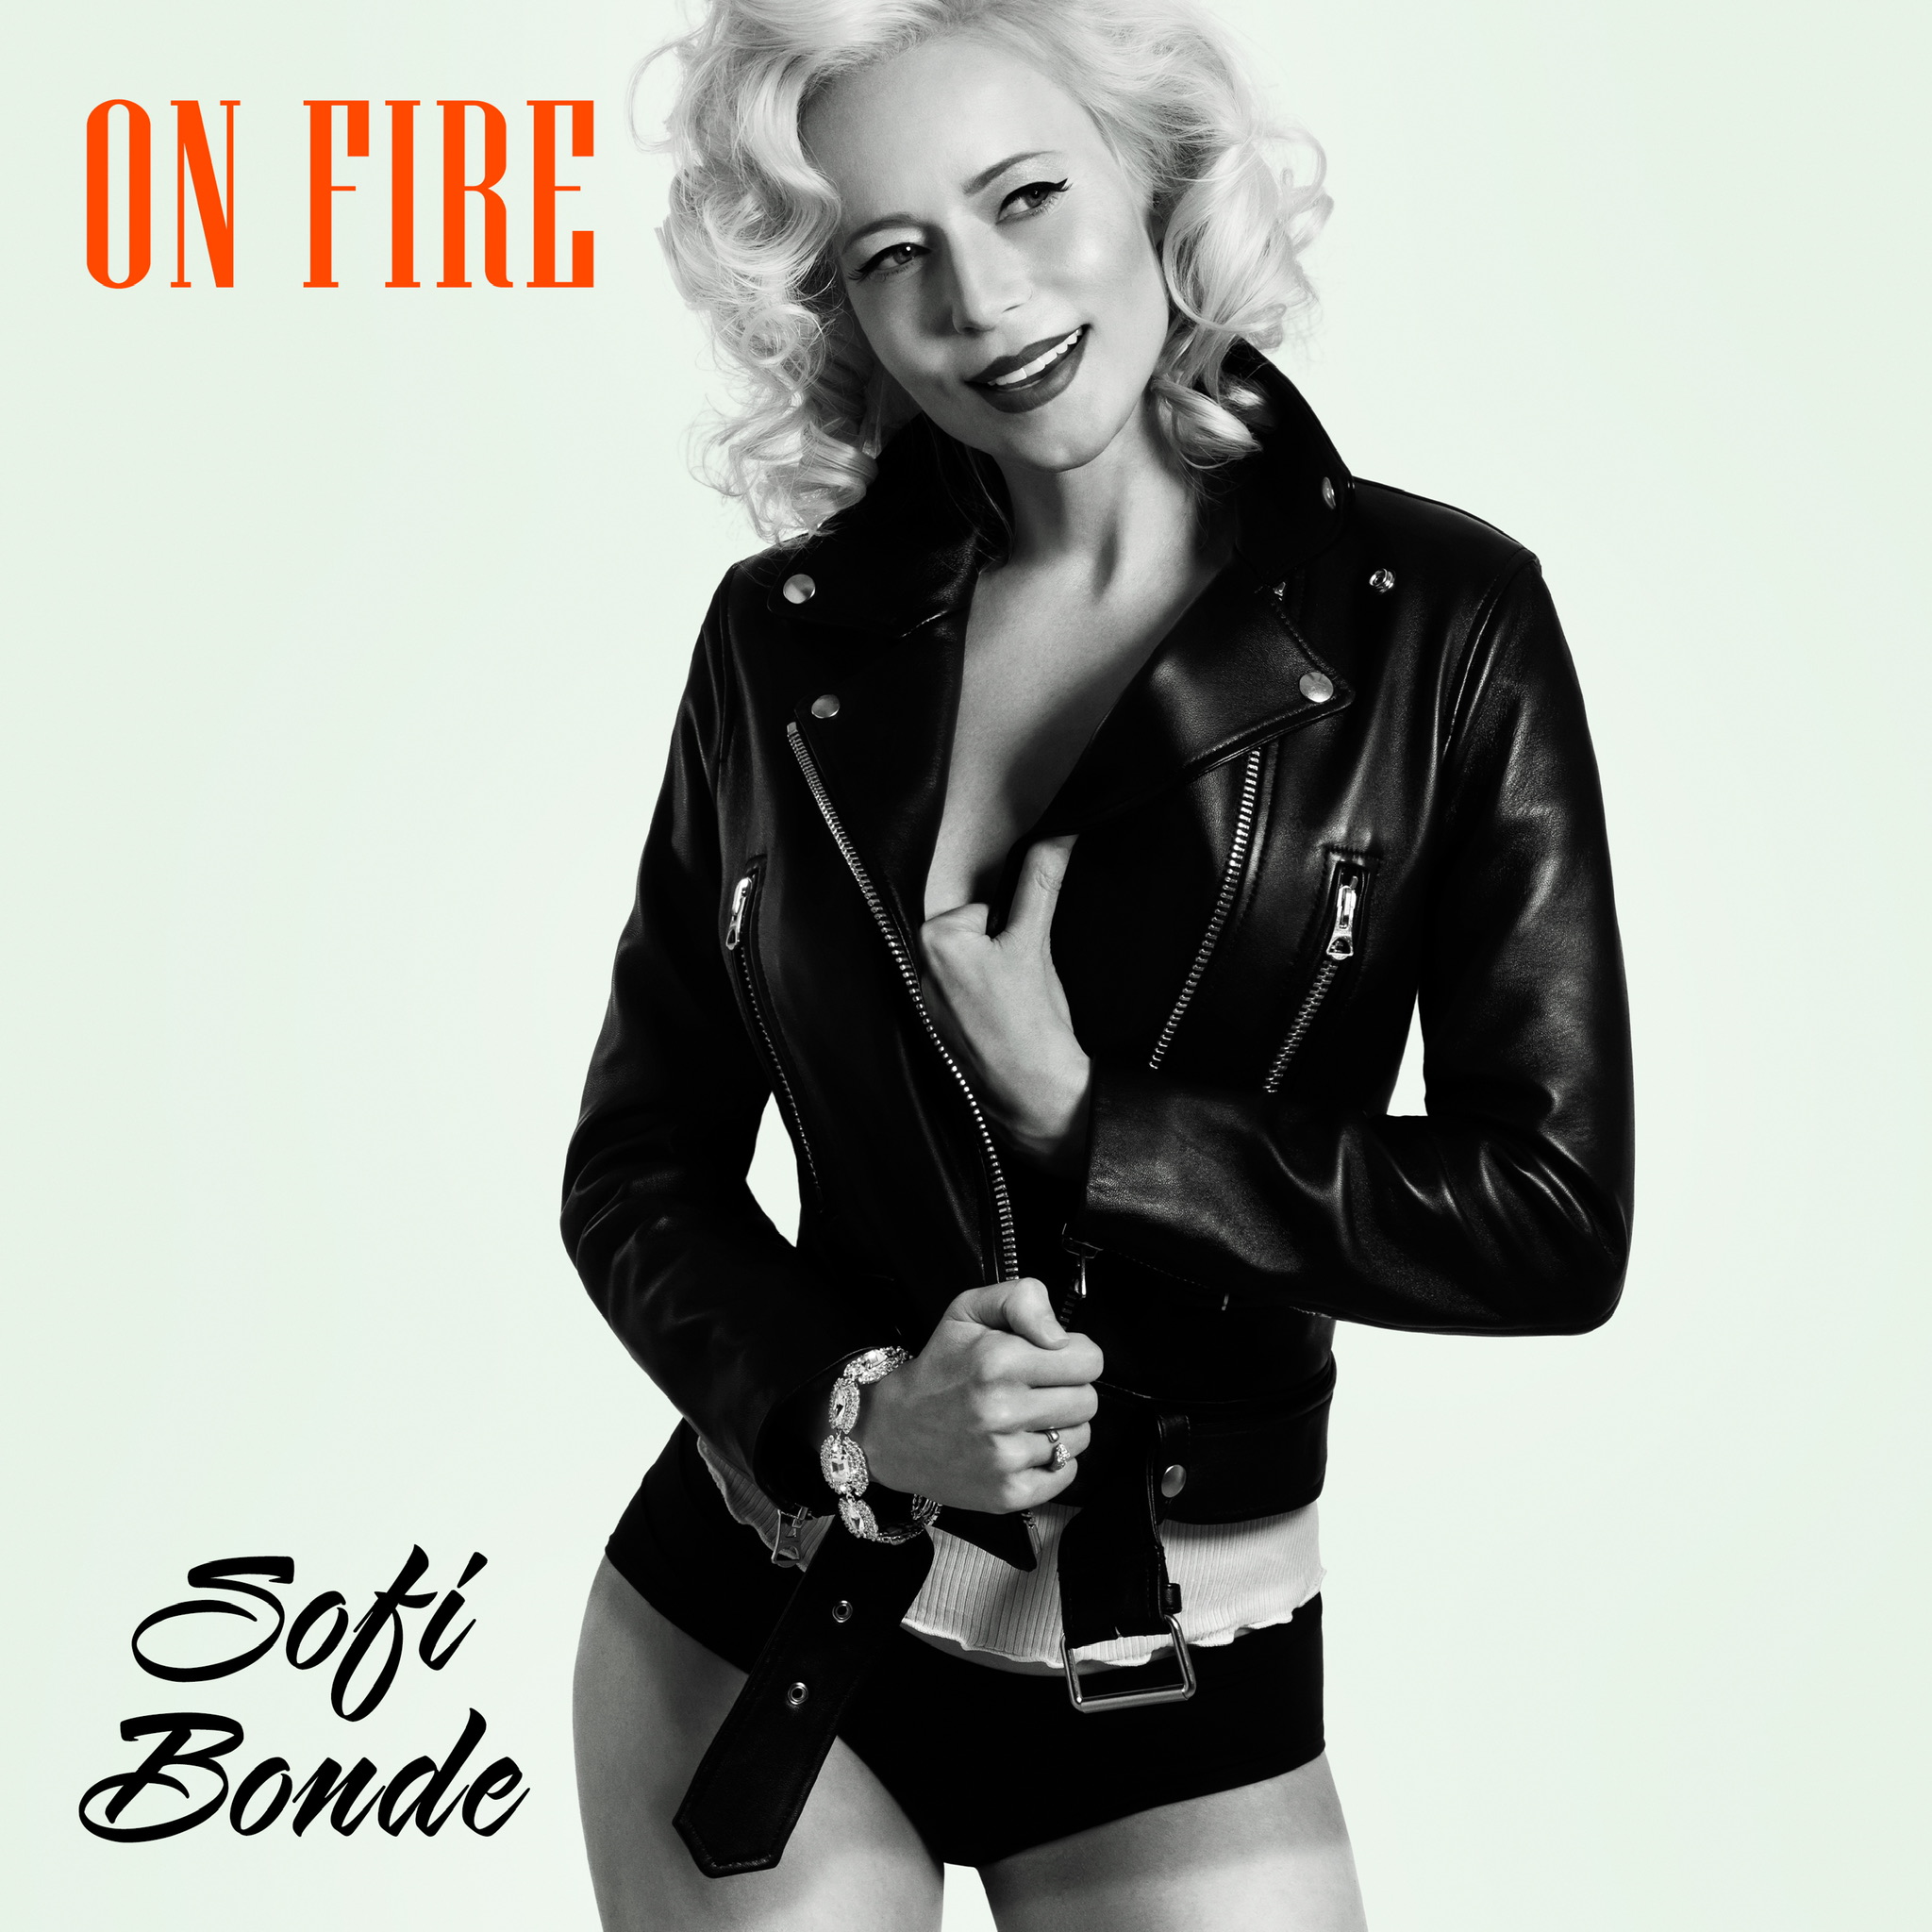 Sofi Bonde – “On Fire”